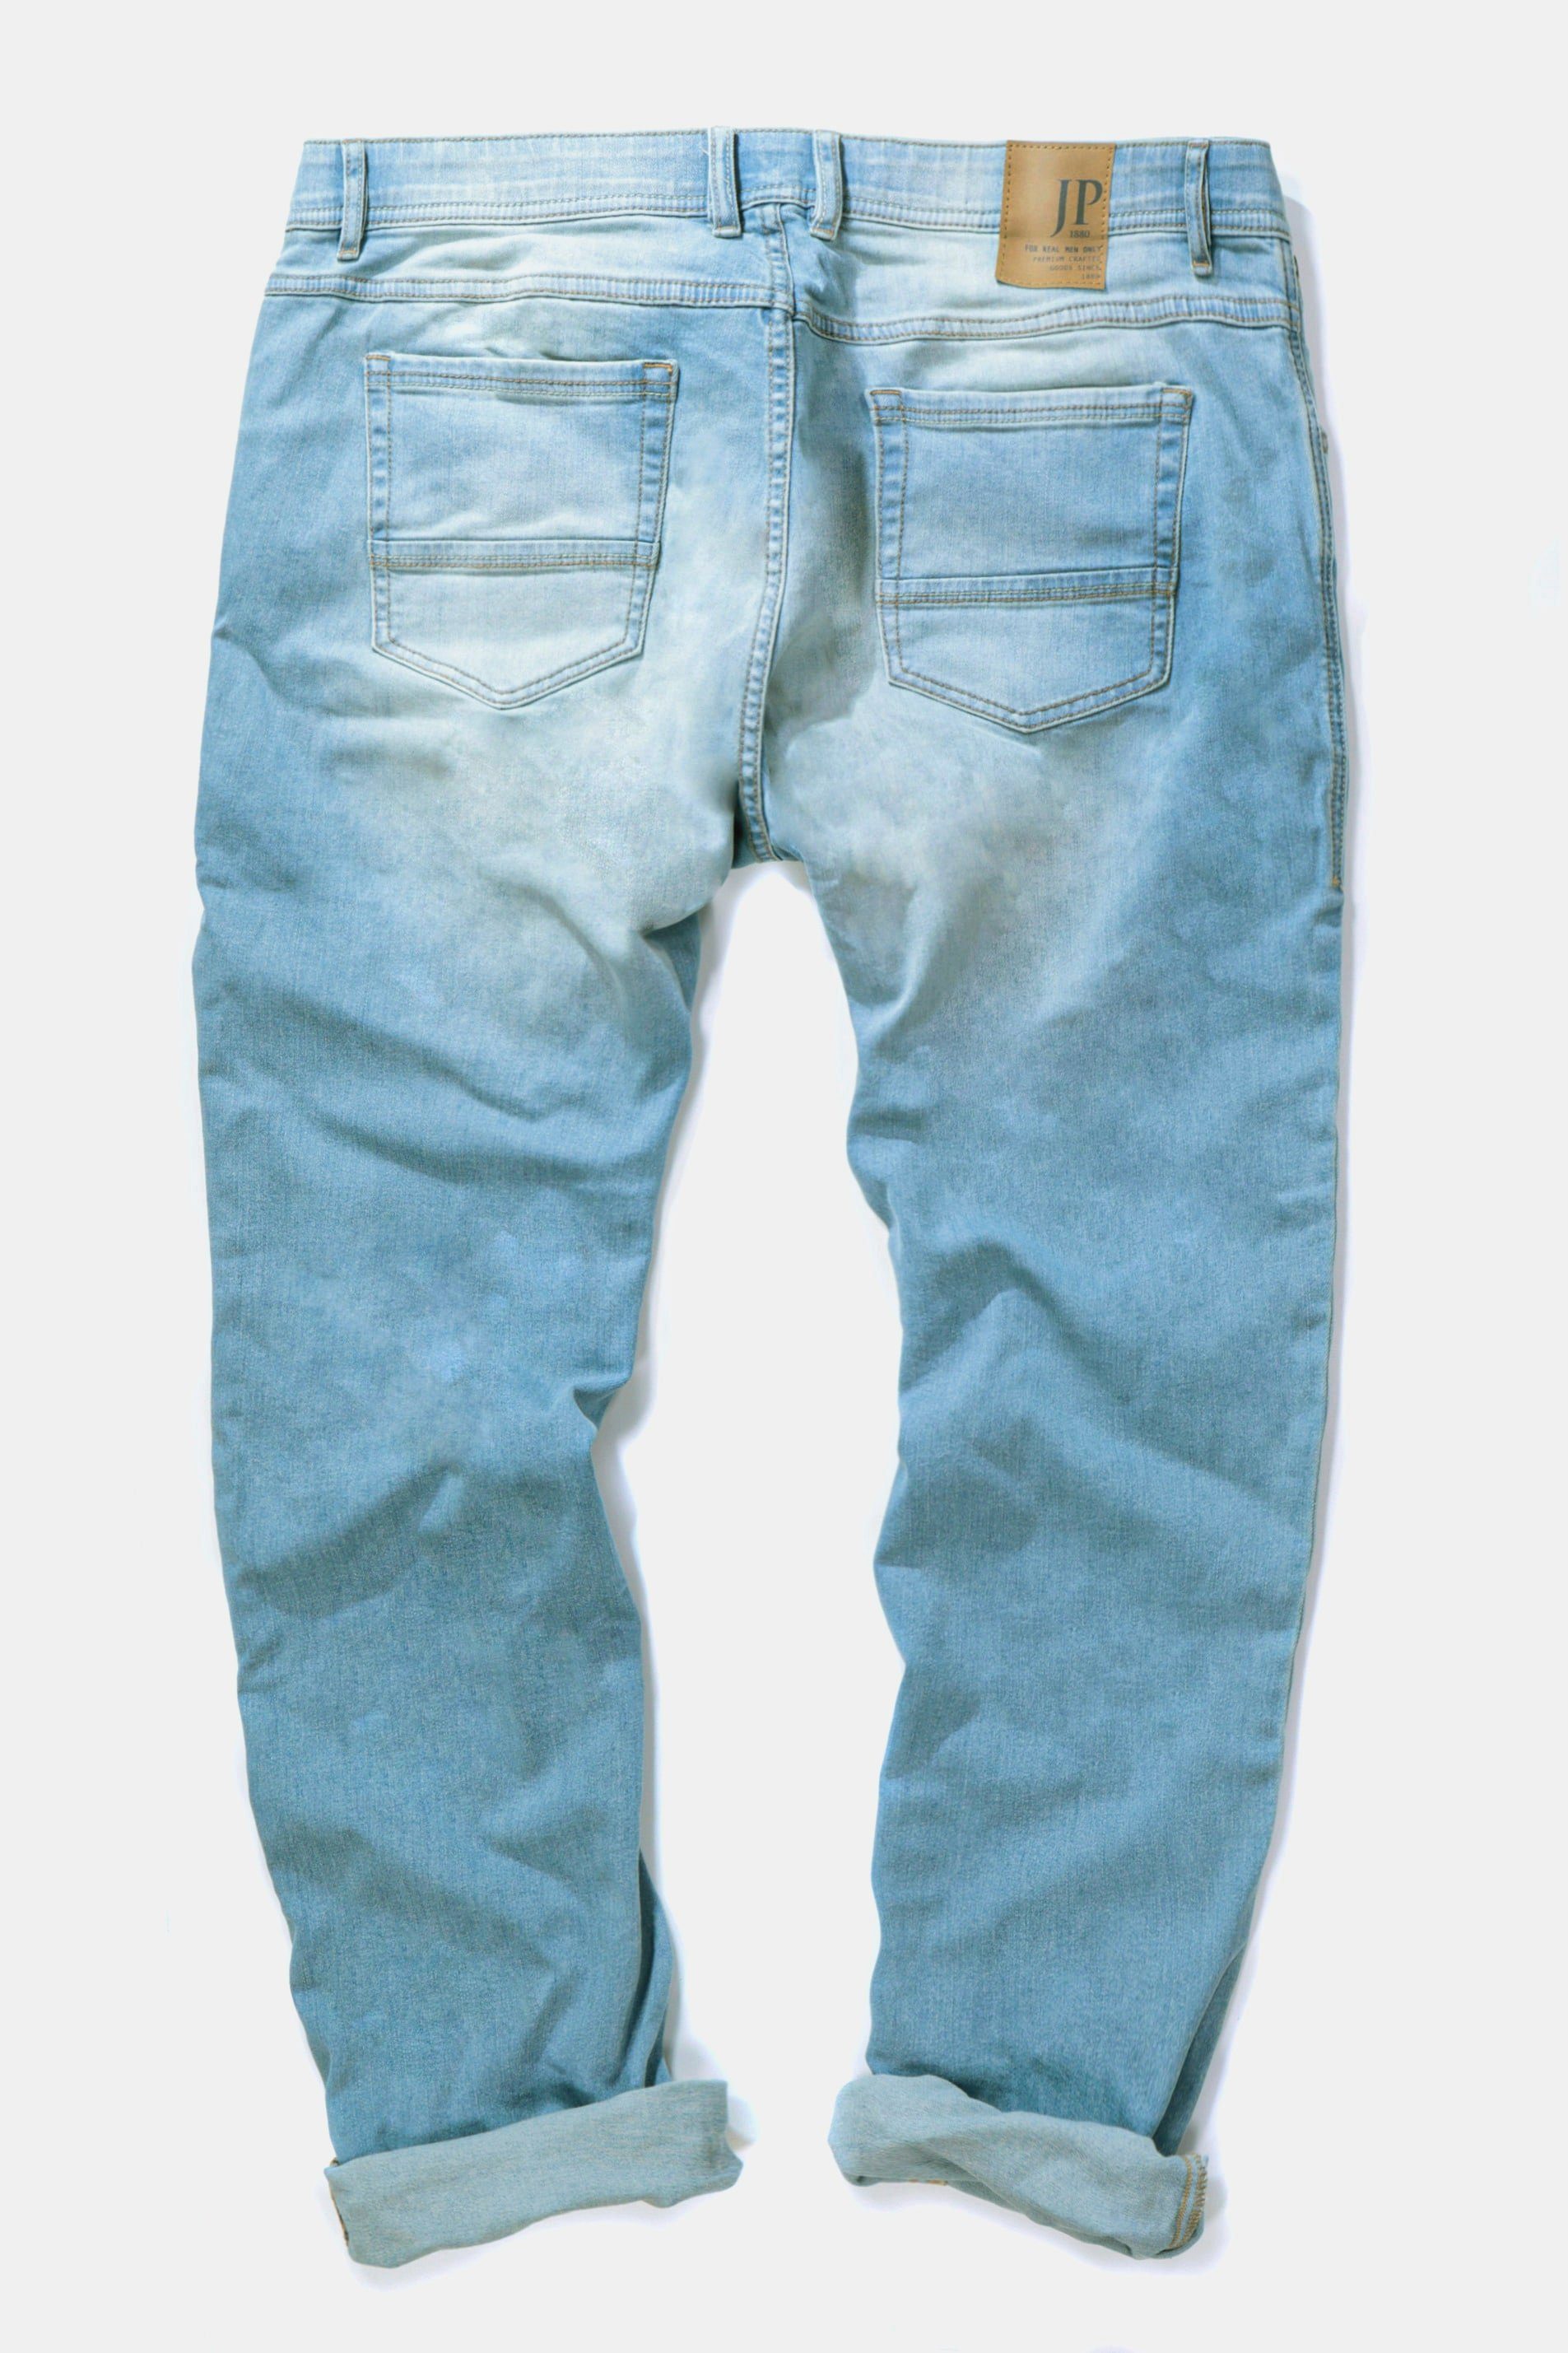 JP1880 Cargohose Jeans Denim bis Bauchfit 70/35 bleached Gr. denim